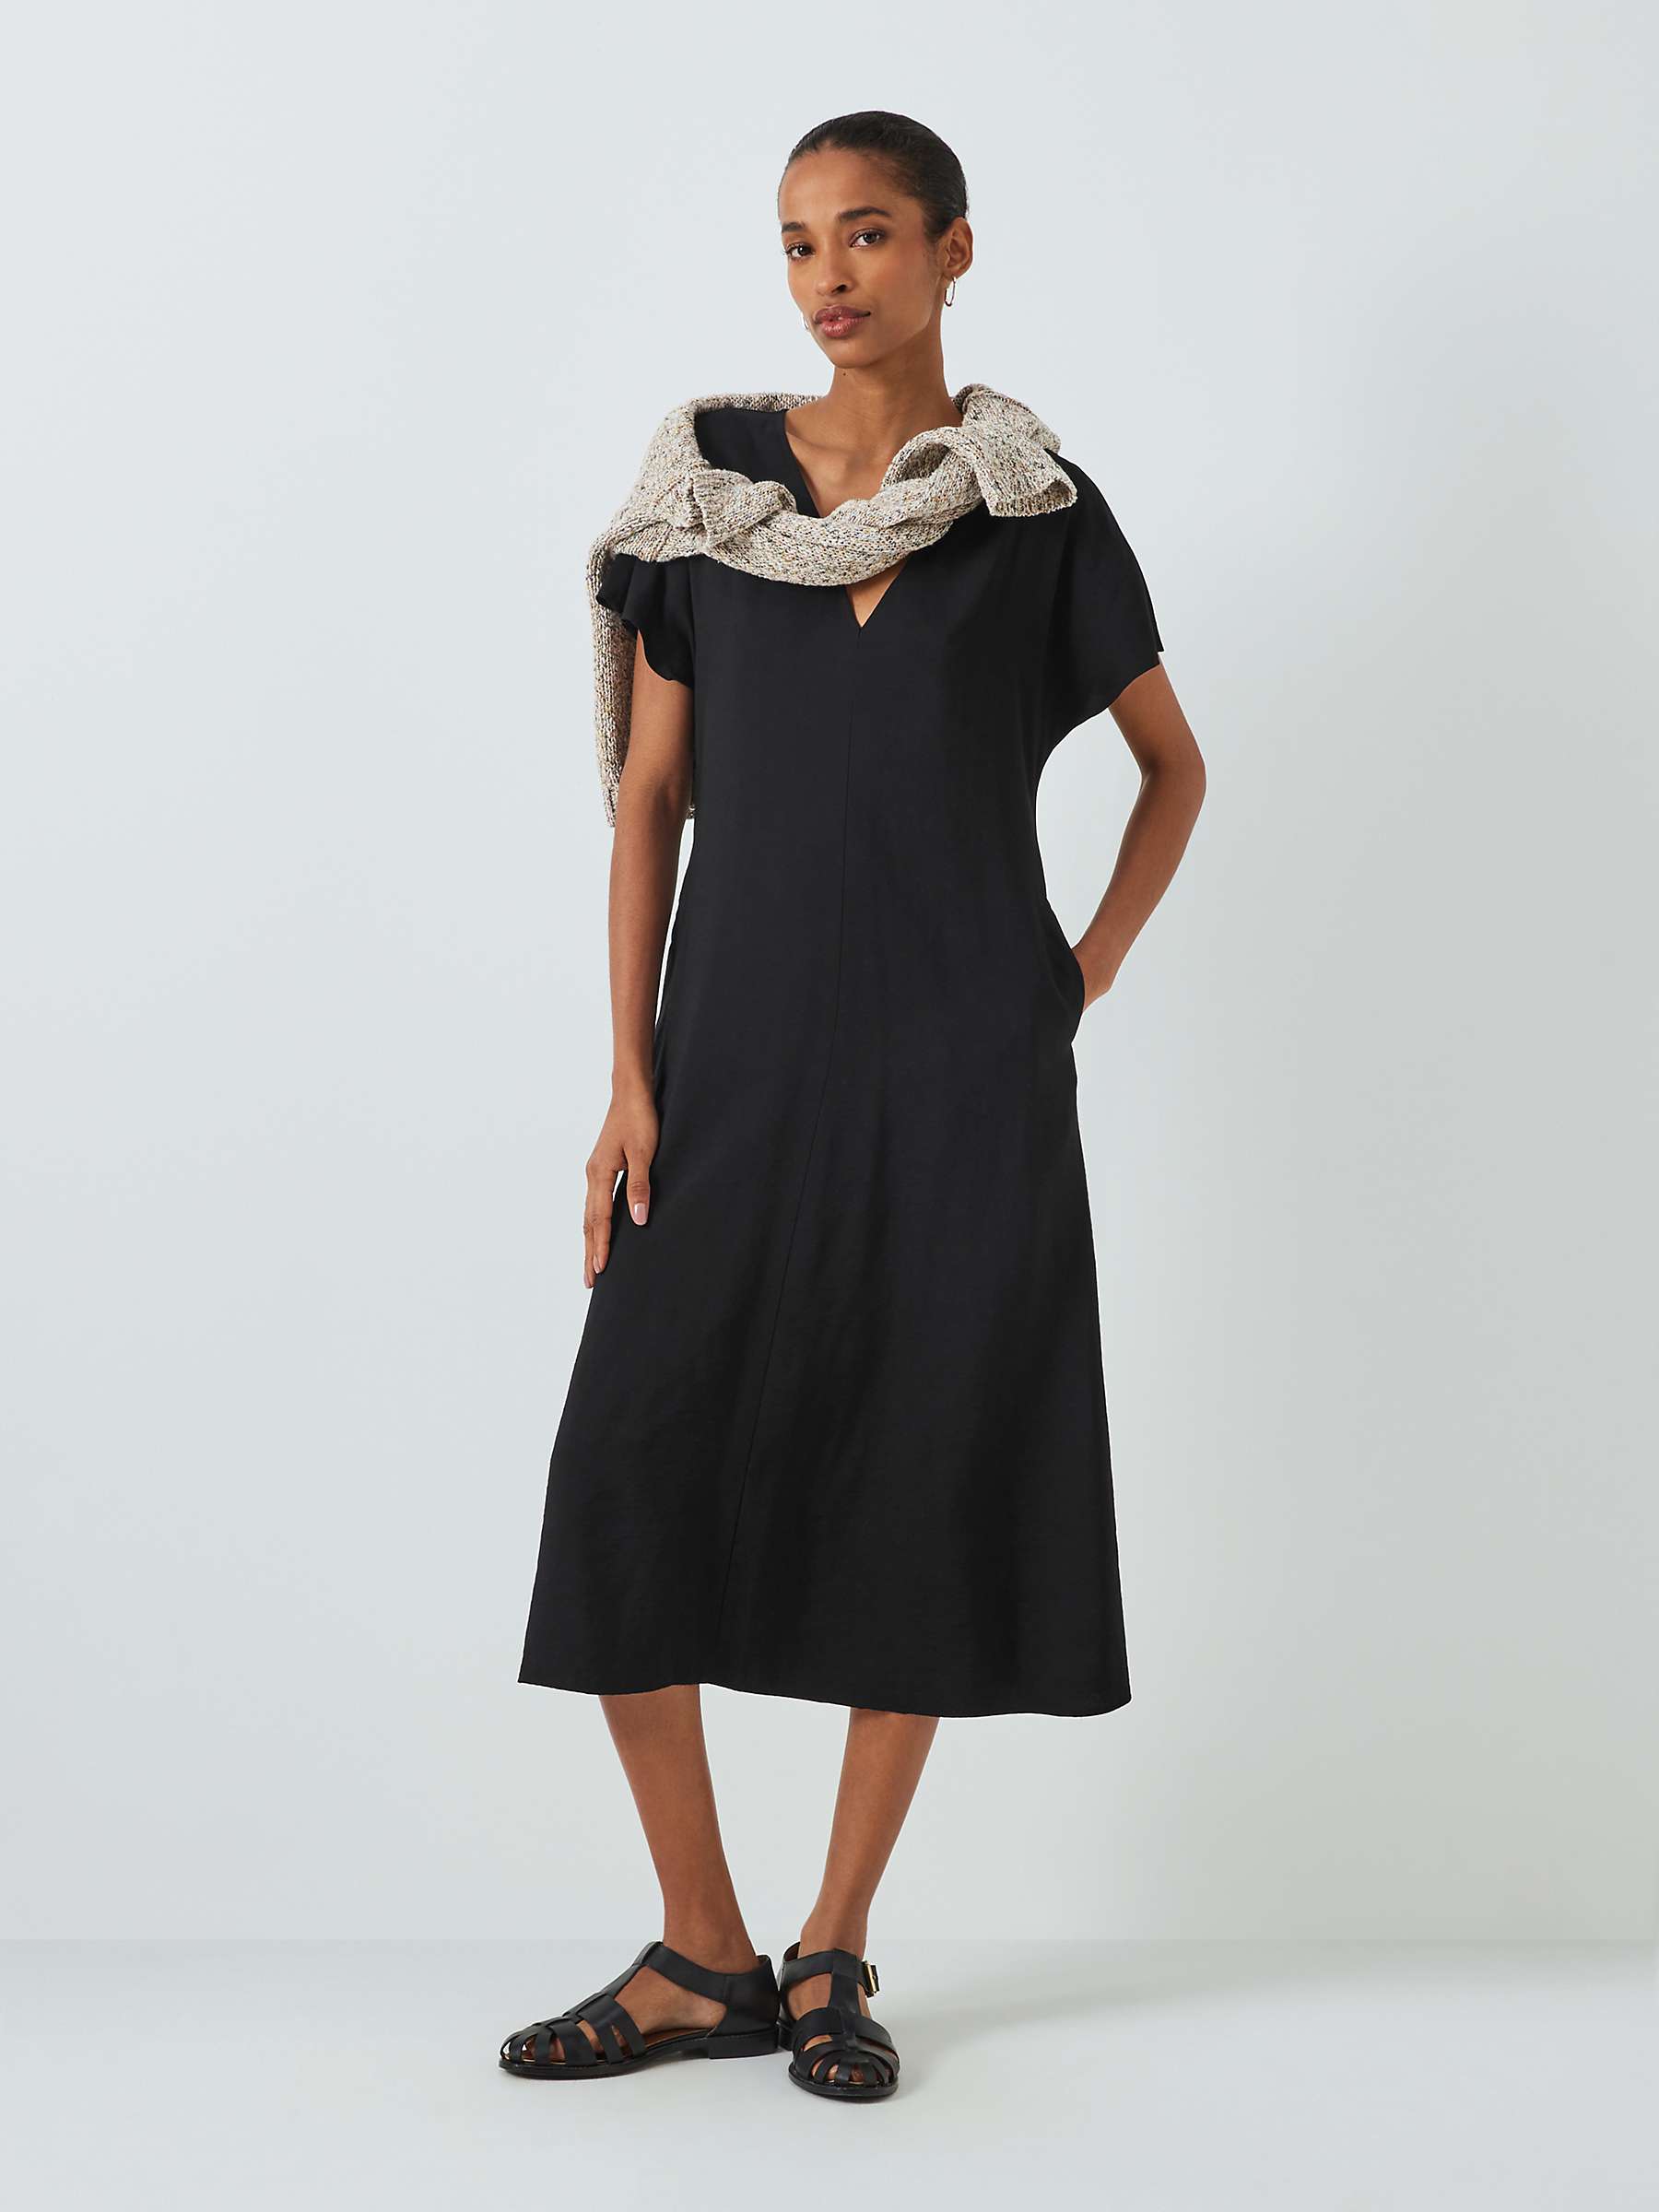 Buy John Lewis Short Sleeve Twill Dress, Black Online at johnlewis.com